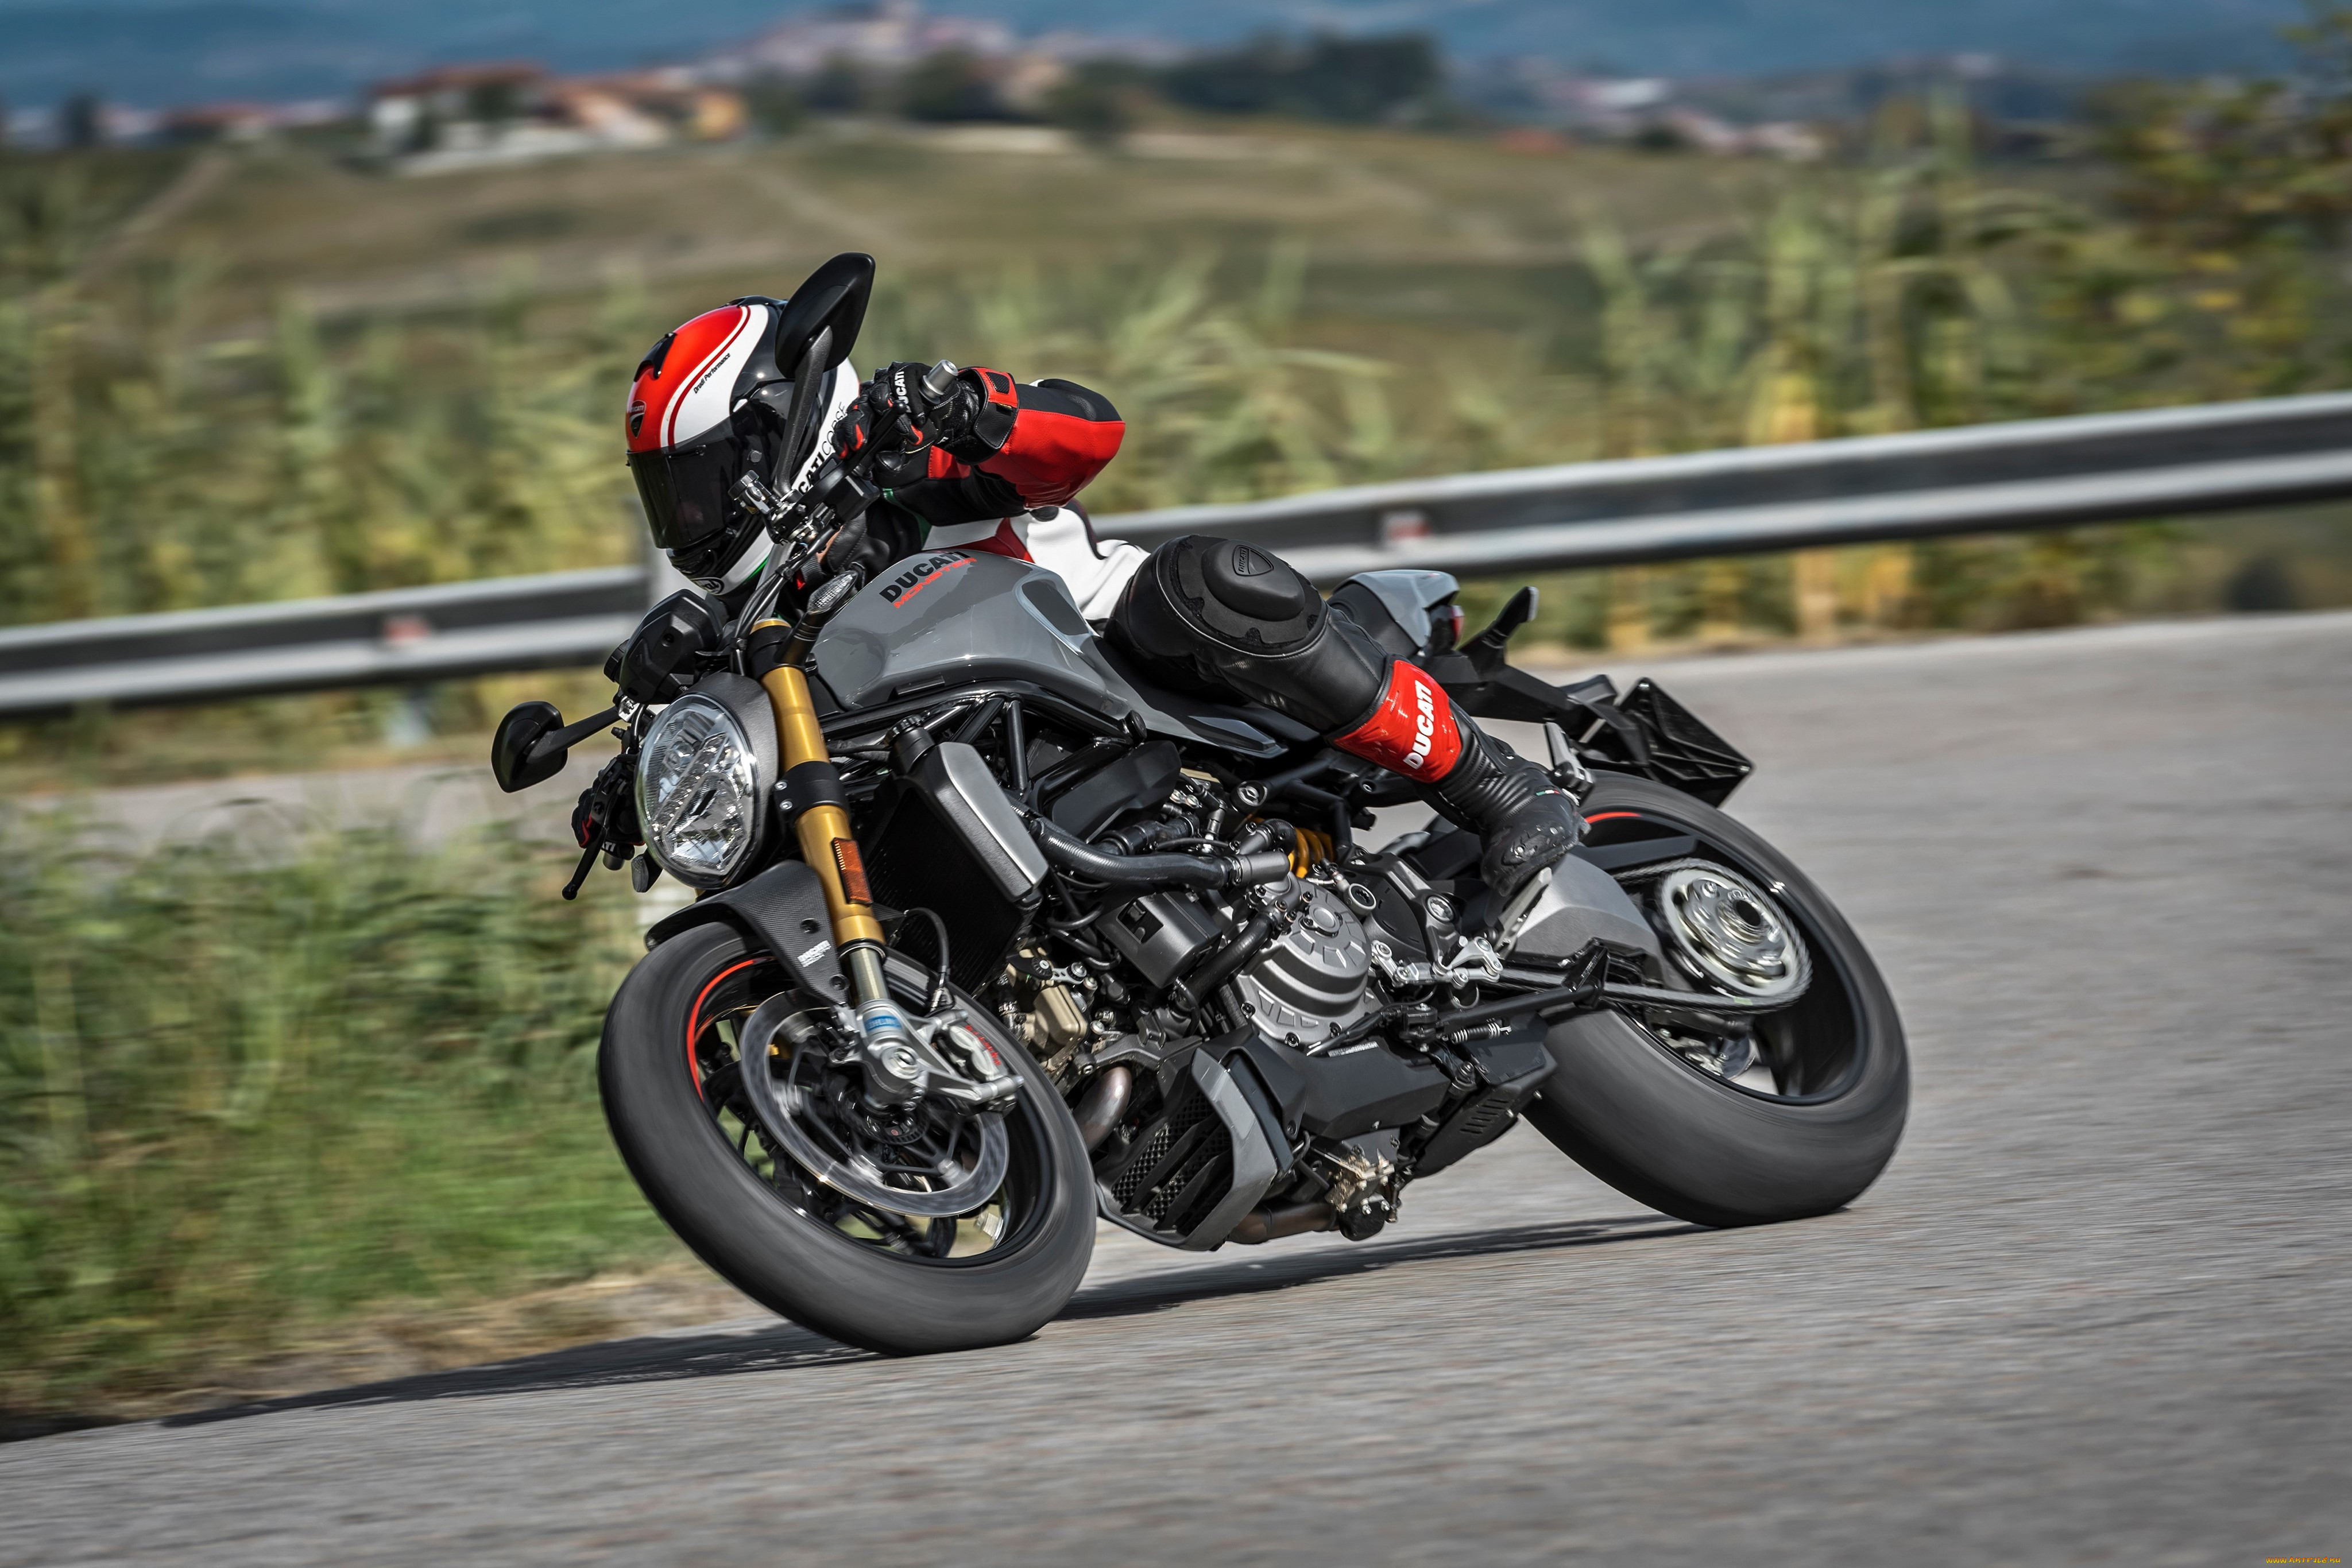 Топовые мотоциклы. Мотоцикл Ducati Monster 1200s. Мотоцикл Ducati Monster 1200. Дукати монстр 1200s. Ducati Monster 1200 s 2019.